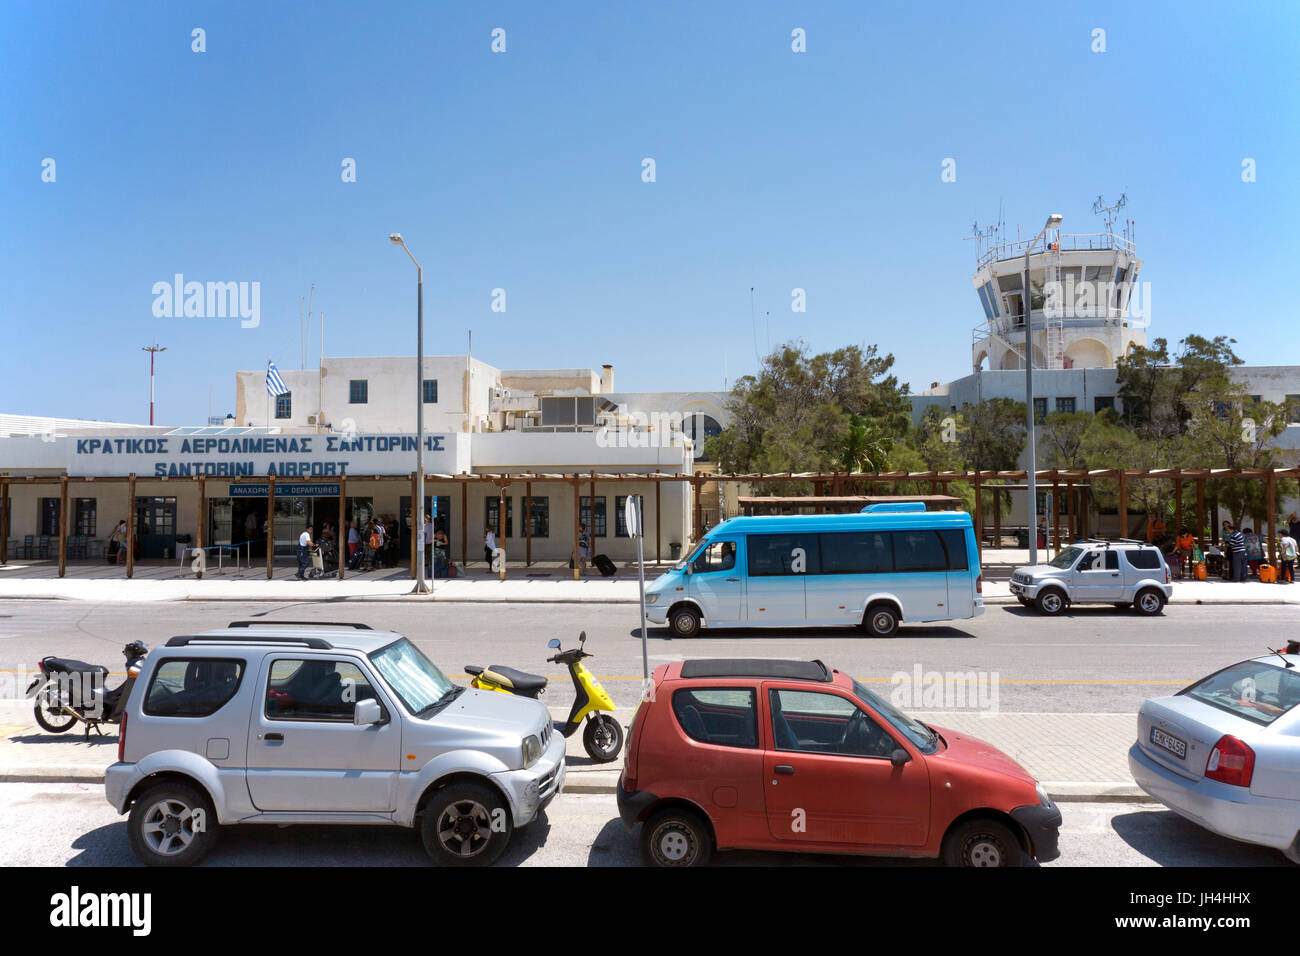 Flughafen Santorin, Kykladen, Aegaeis, Griechenland, Mittelmeer, Europa | Airport of Santorini, Cyclades, Greece, Mediterranean Sea, Europe Stock Photo